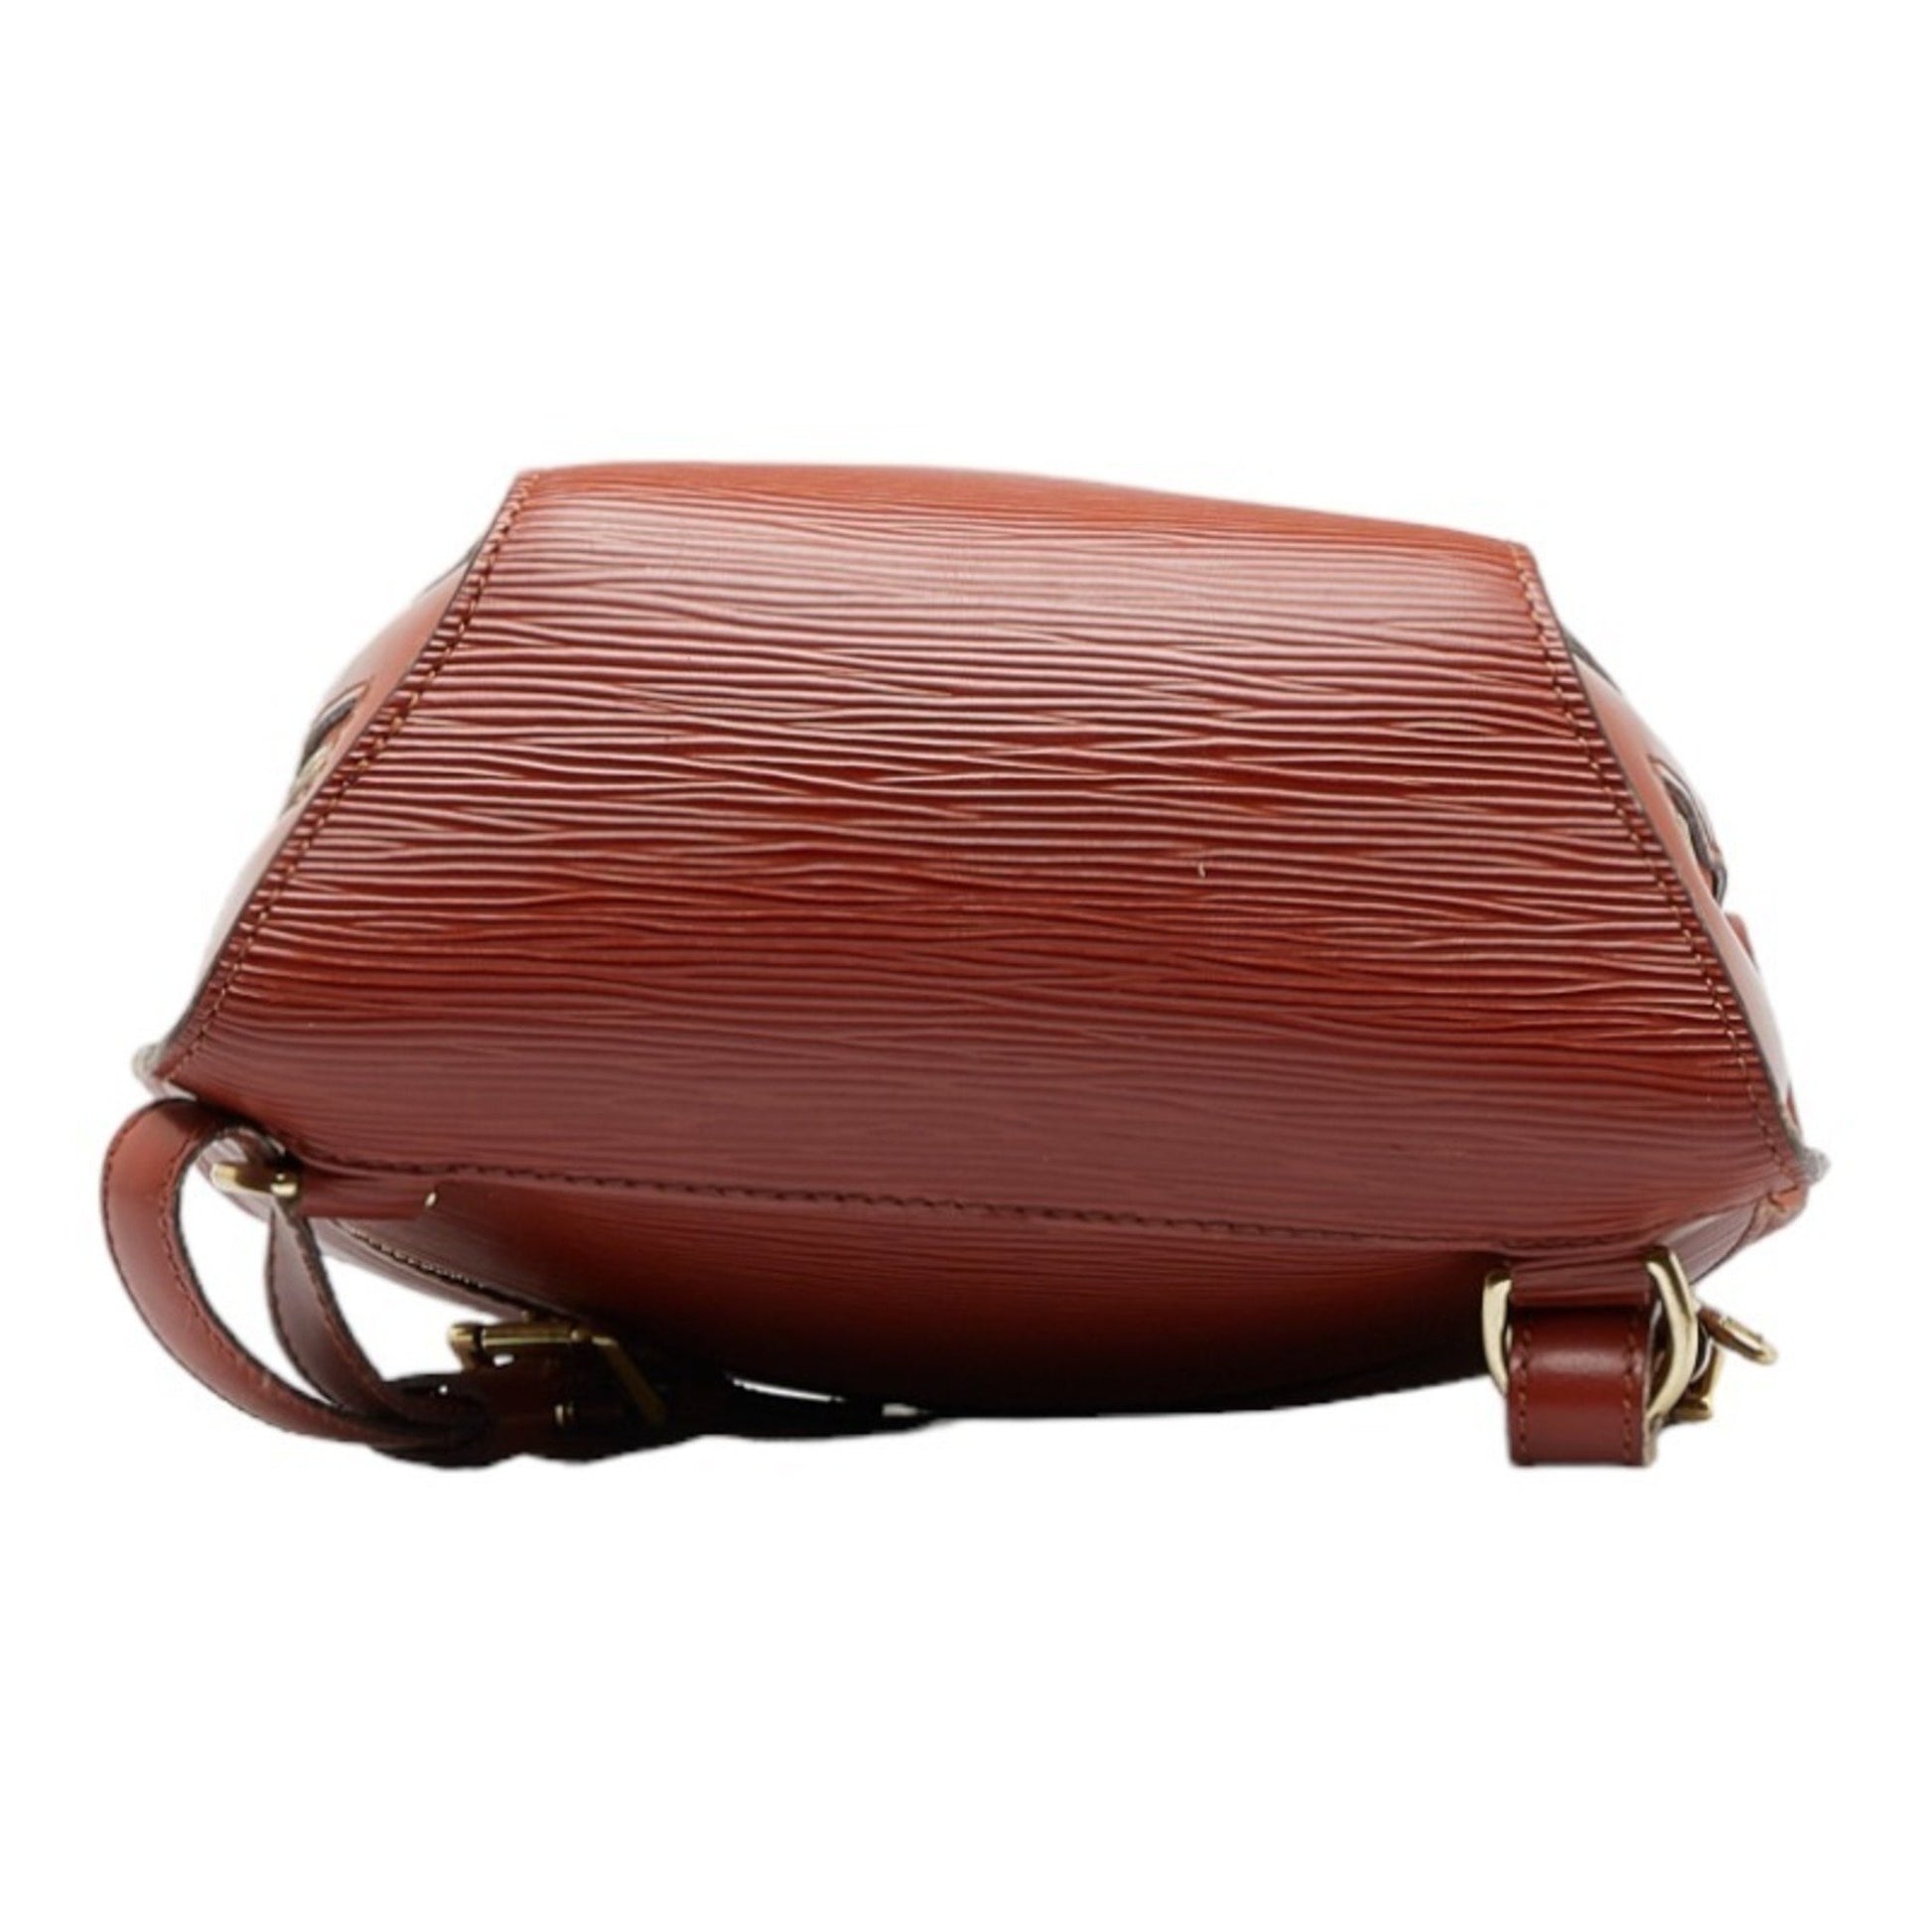 Louis Vuitton Epi Mabillon Backpack M52233 Kenya Brown Leather Women's